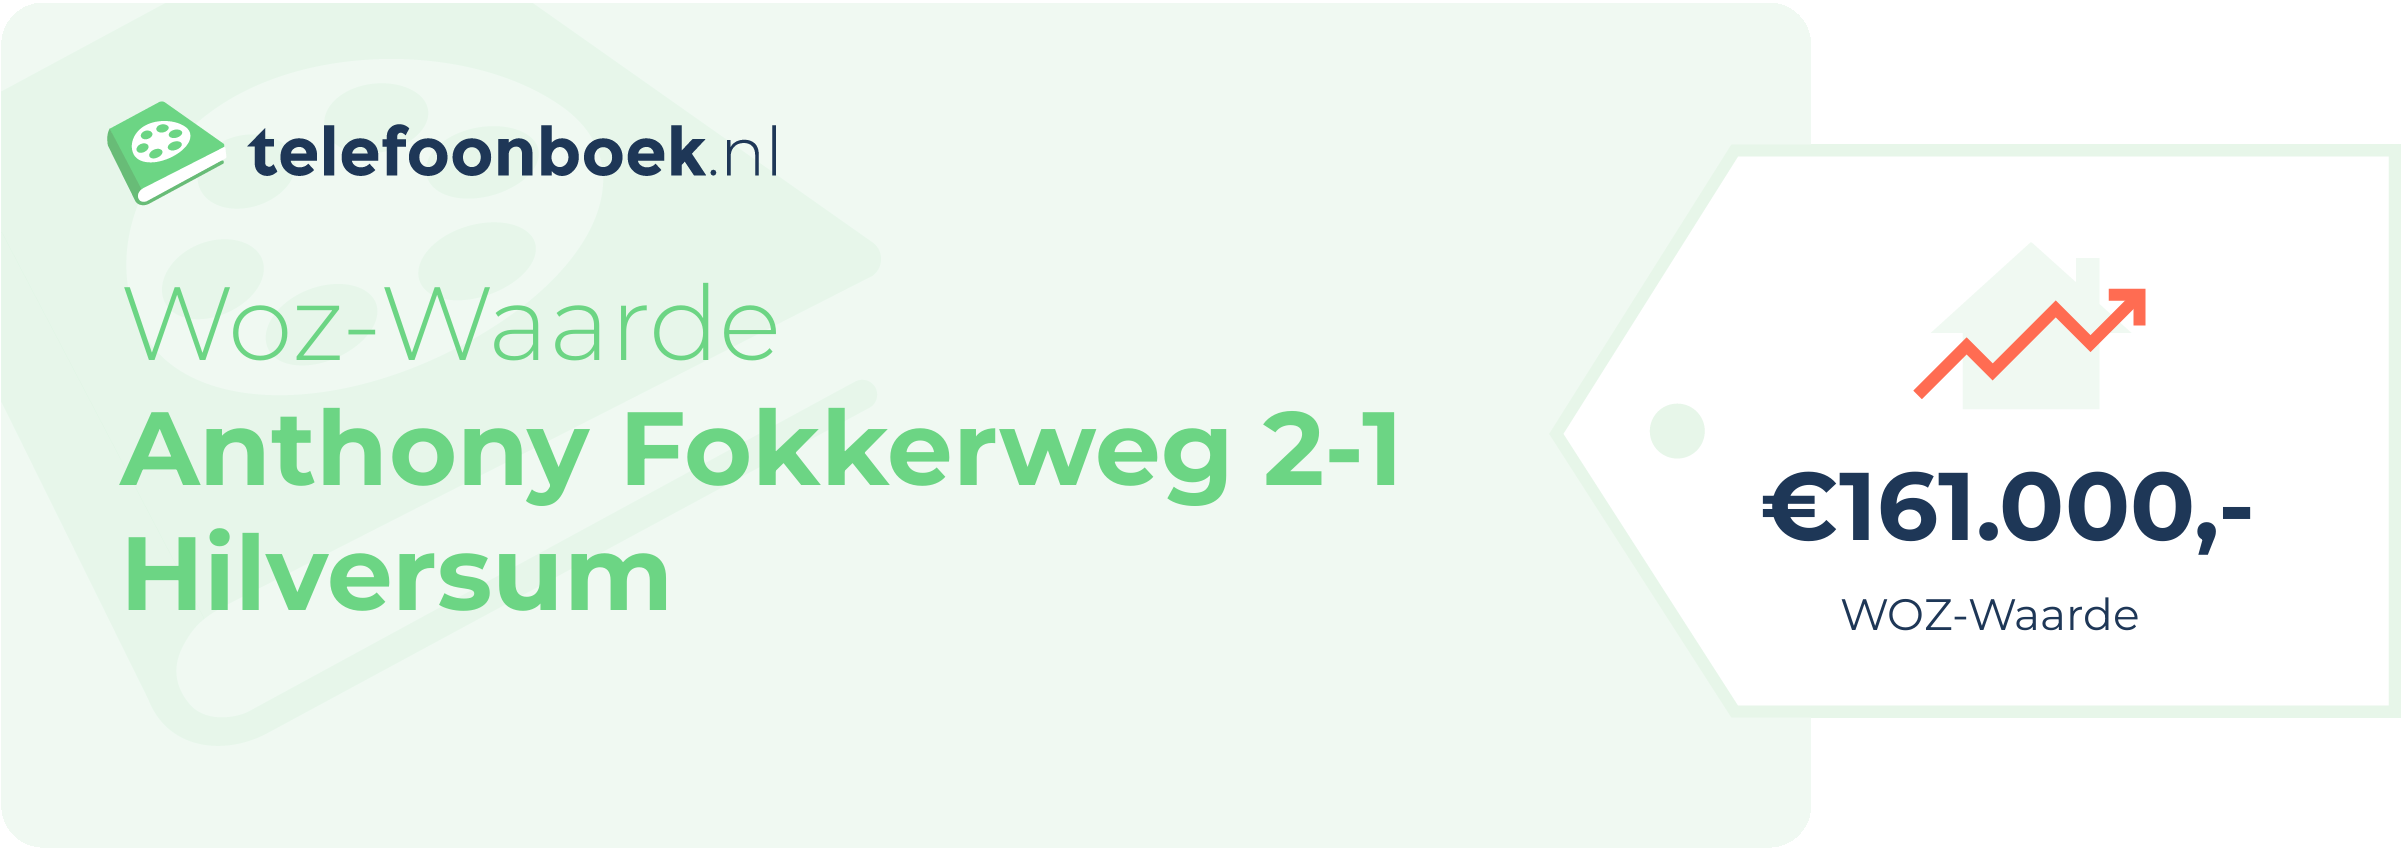 WOZ-waarde Anthony Fokkerweg 2-1 Hilversum